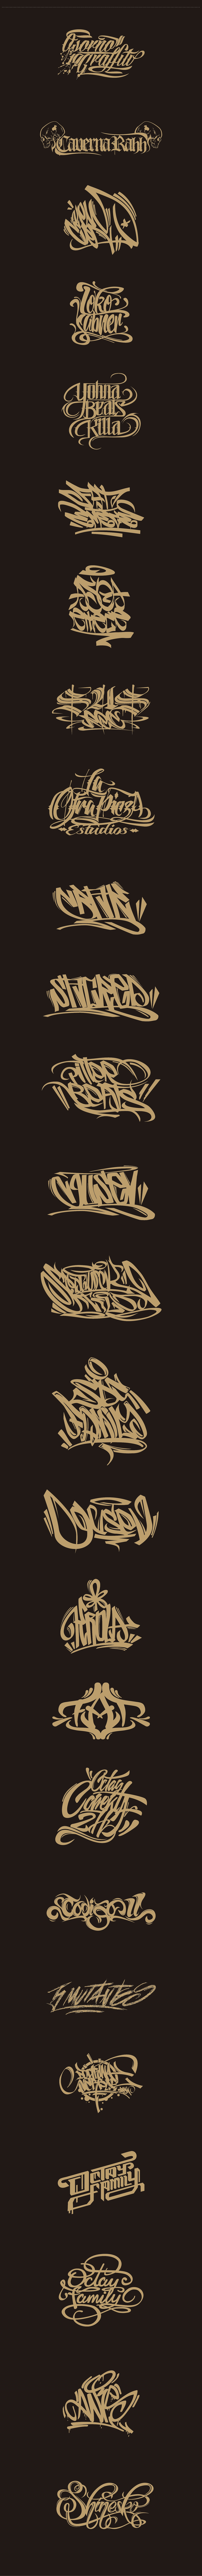 graff logo etiquetas letras Street rap calligraphic lettering tipography hand